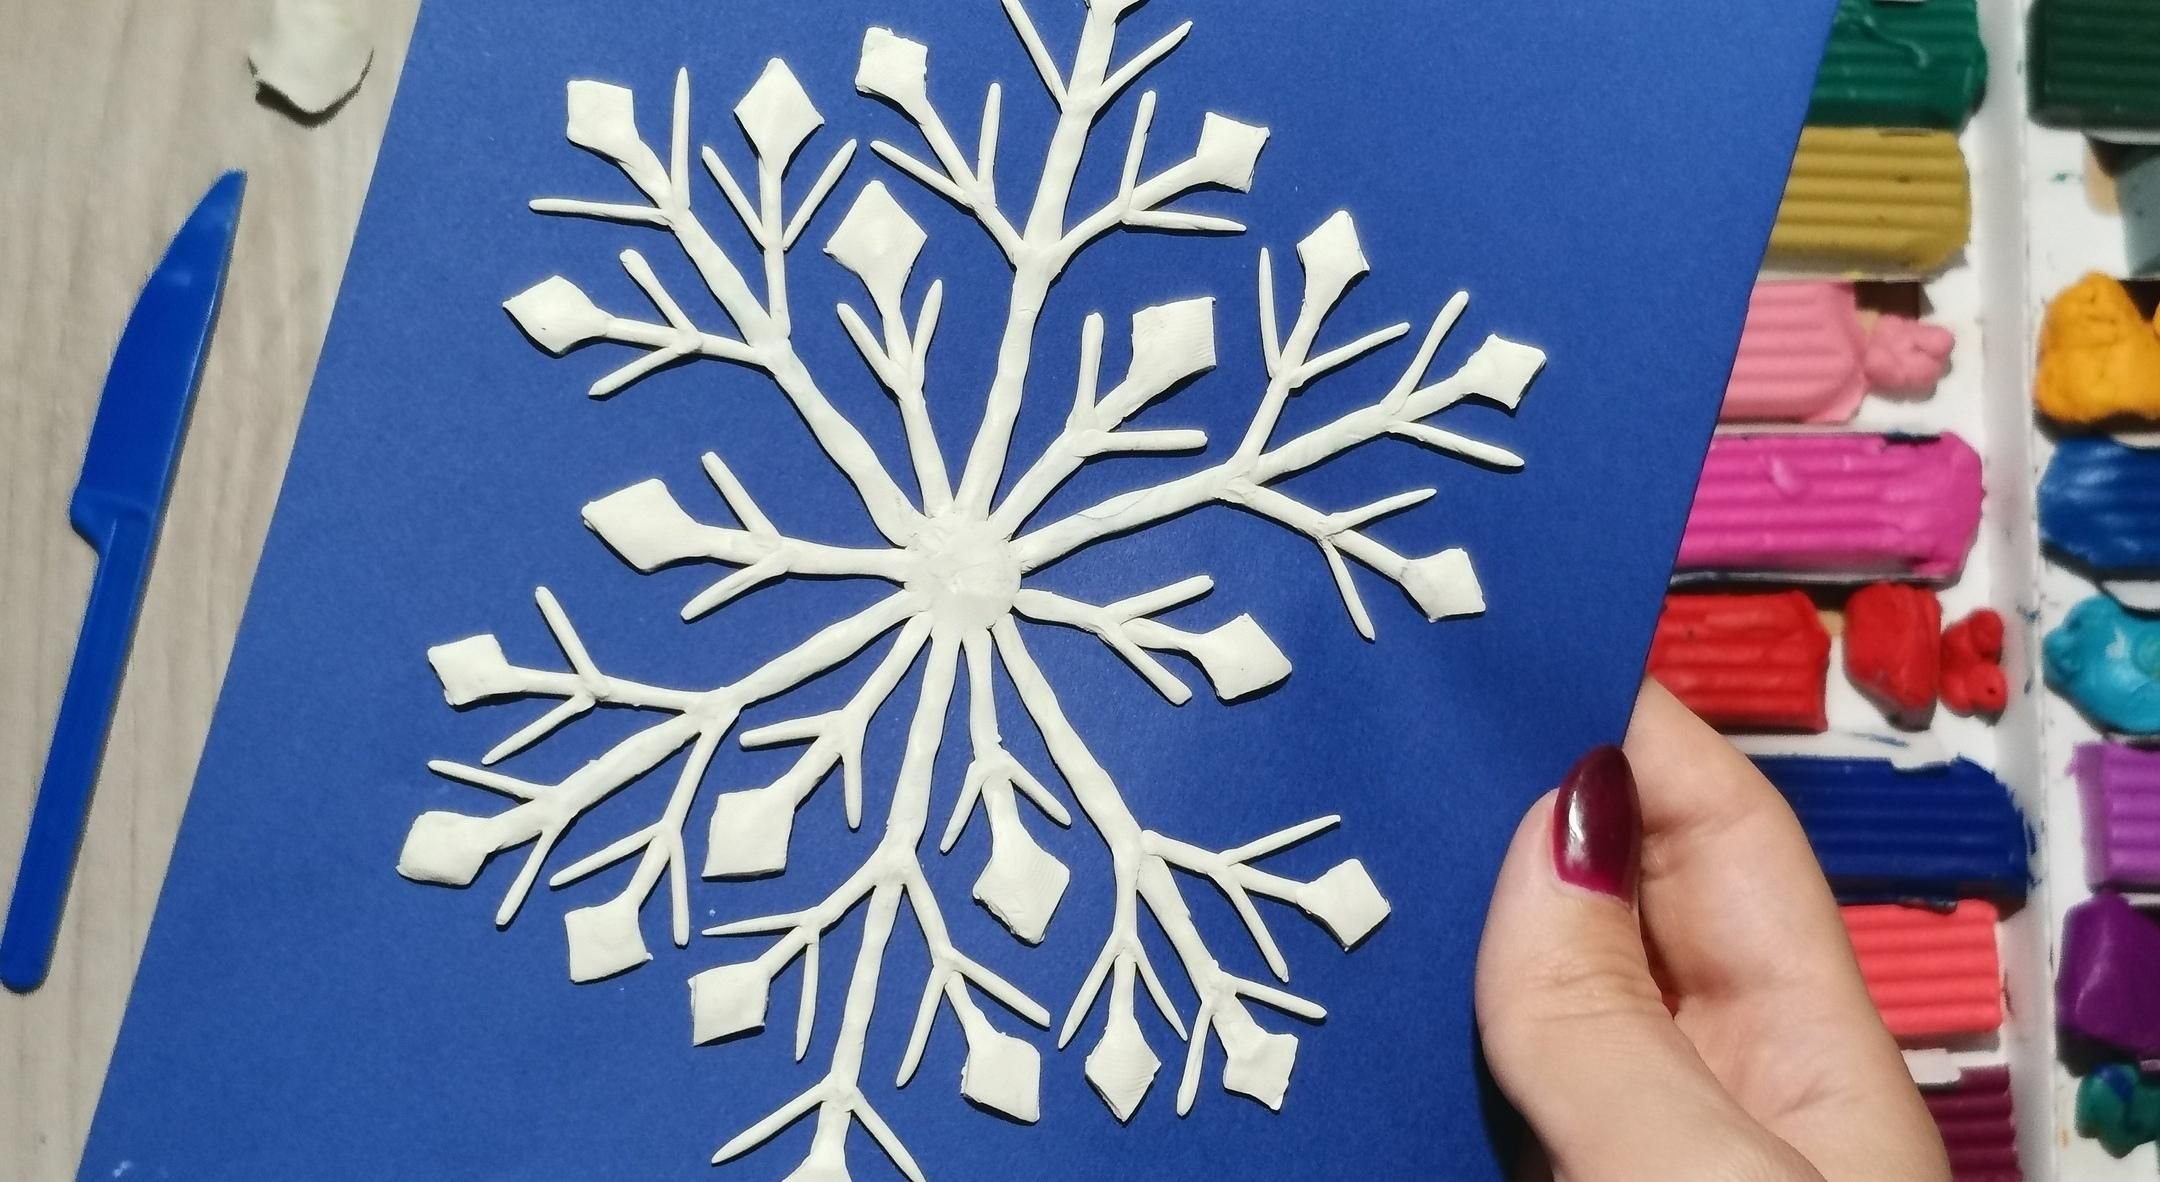 Снежинка из пластилина. Снежинка на картоне. Снежинка пластилин. Снежинка пластилином на картоне. Снежинку облепить пластилином.